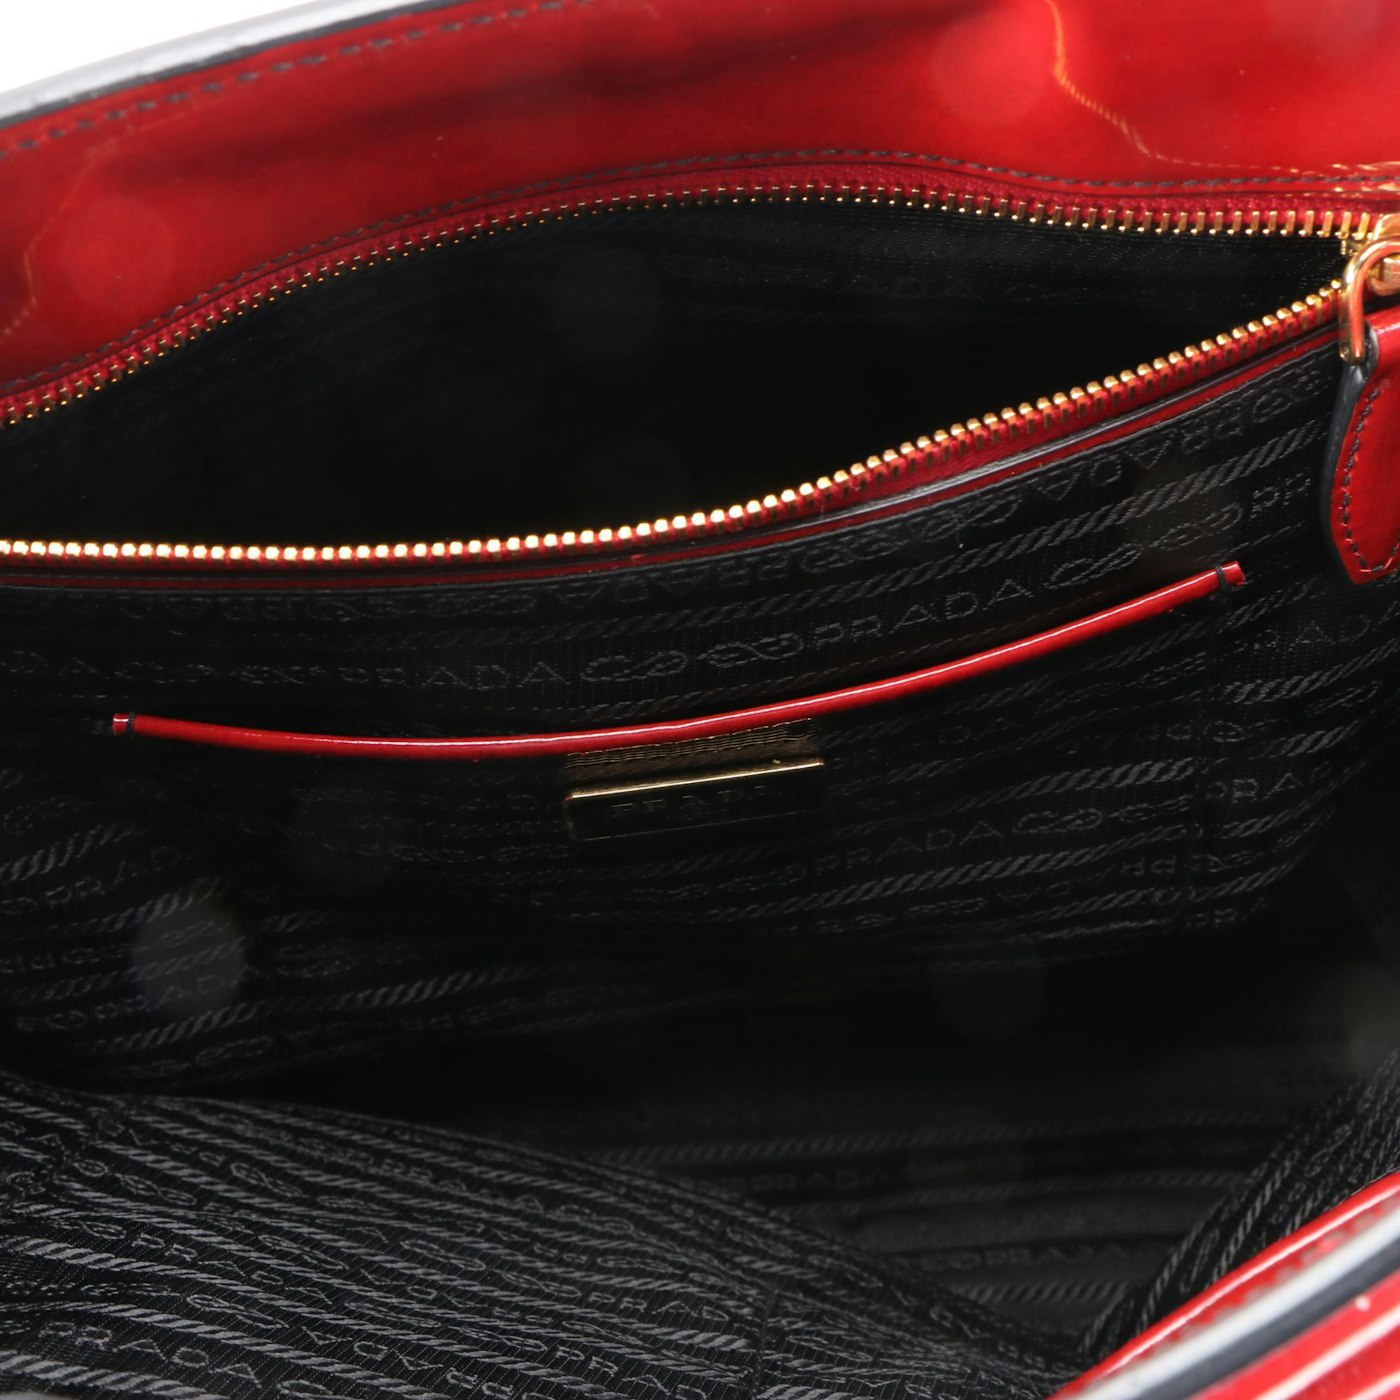 Prada Red Patent Leather Tote Handbag | EBTH